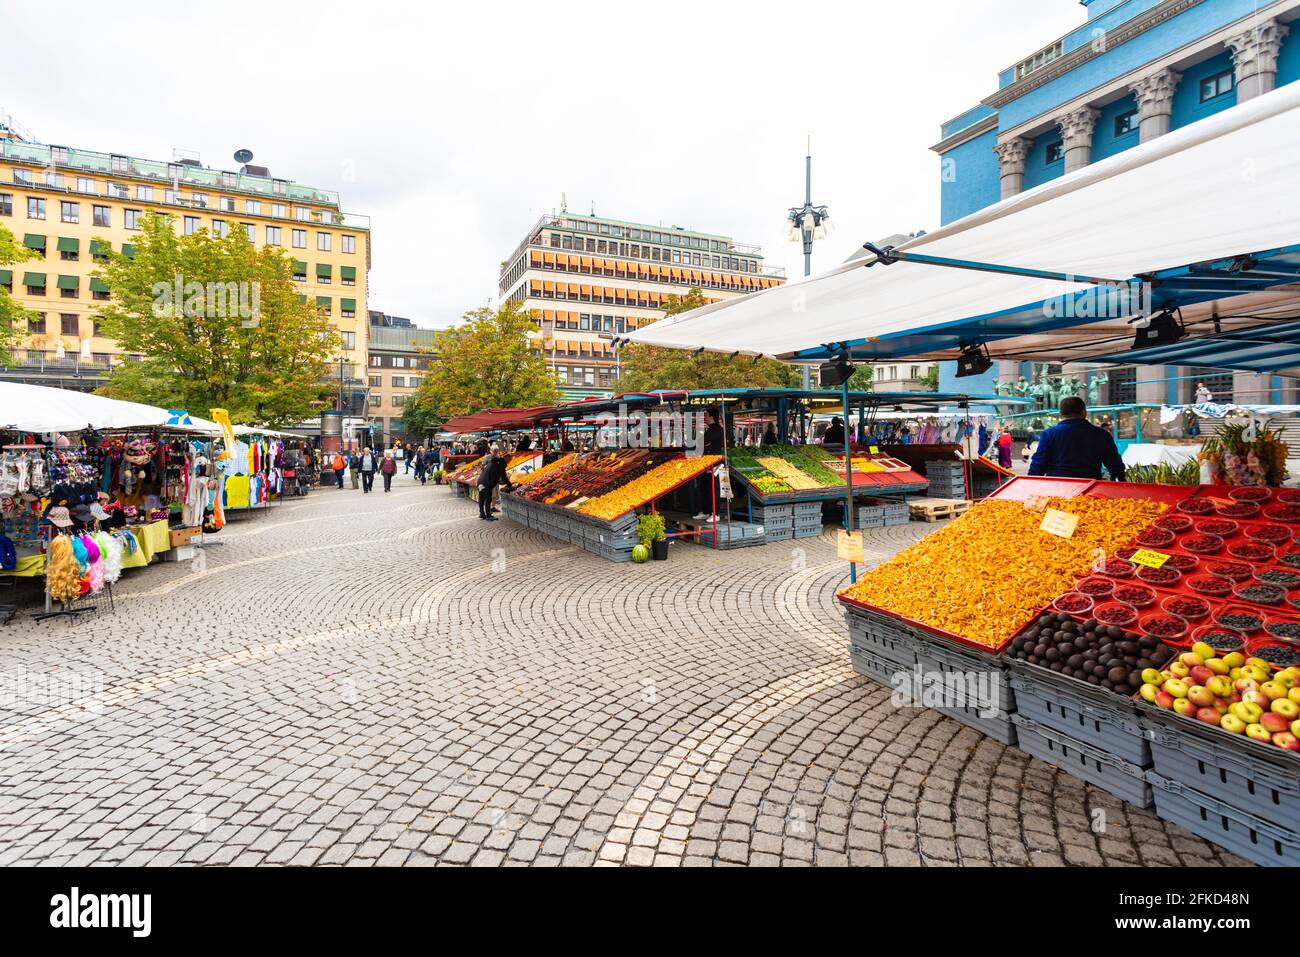 Sweden, Sodermanland, Stockholm, Market in town square Stock Photo